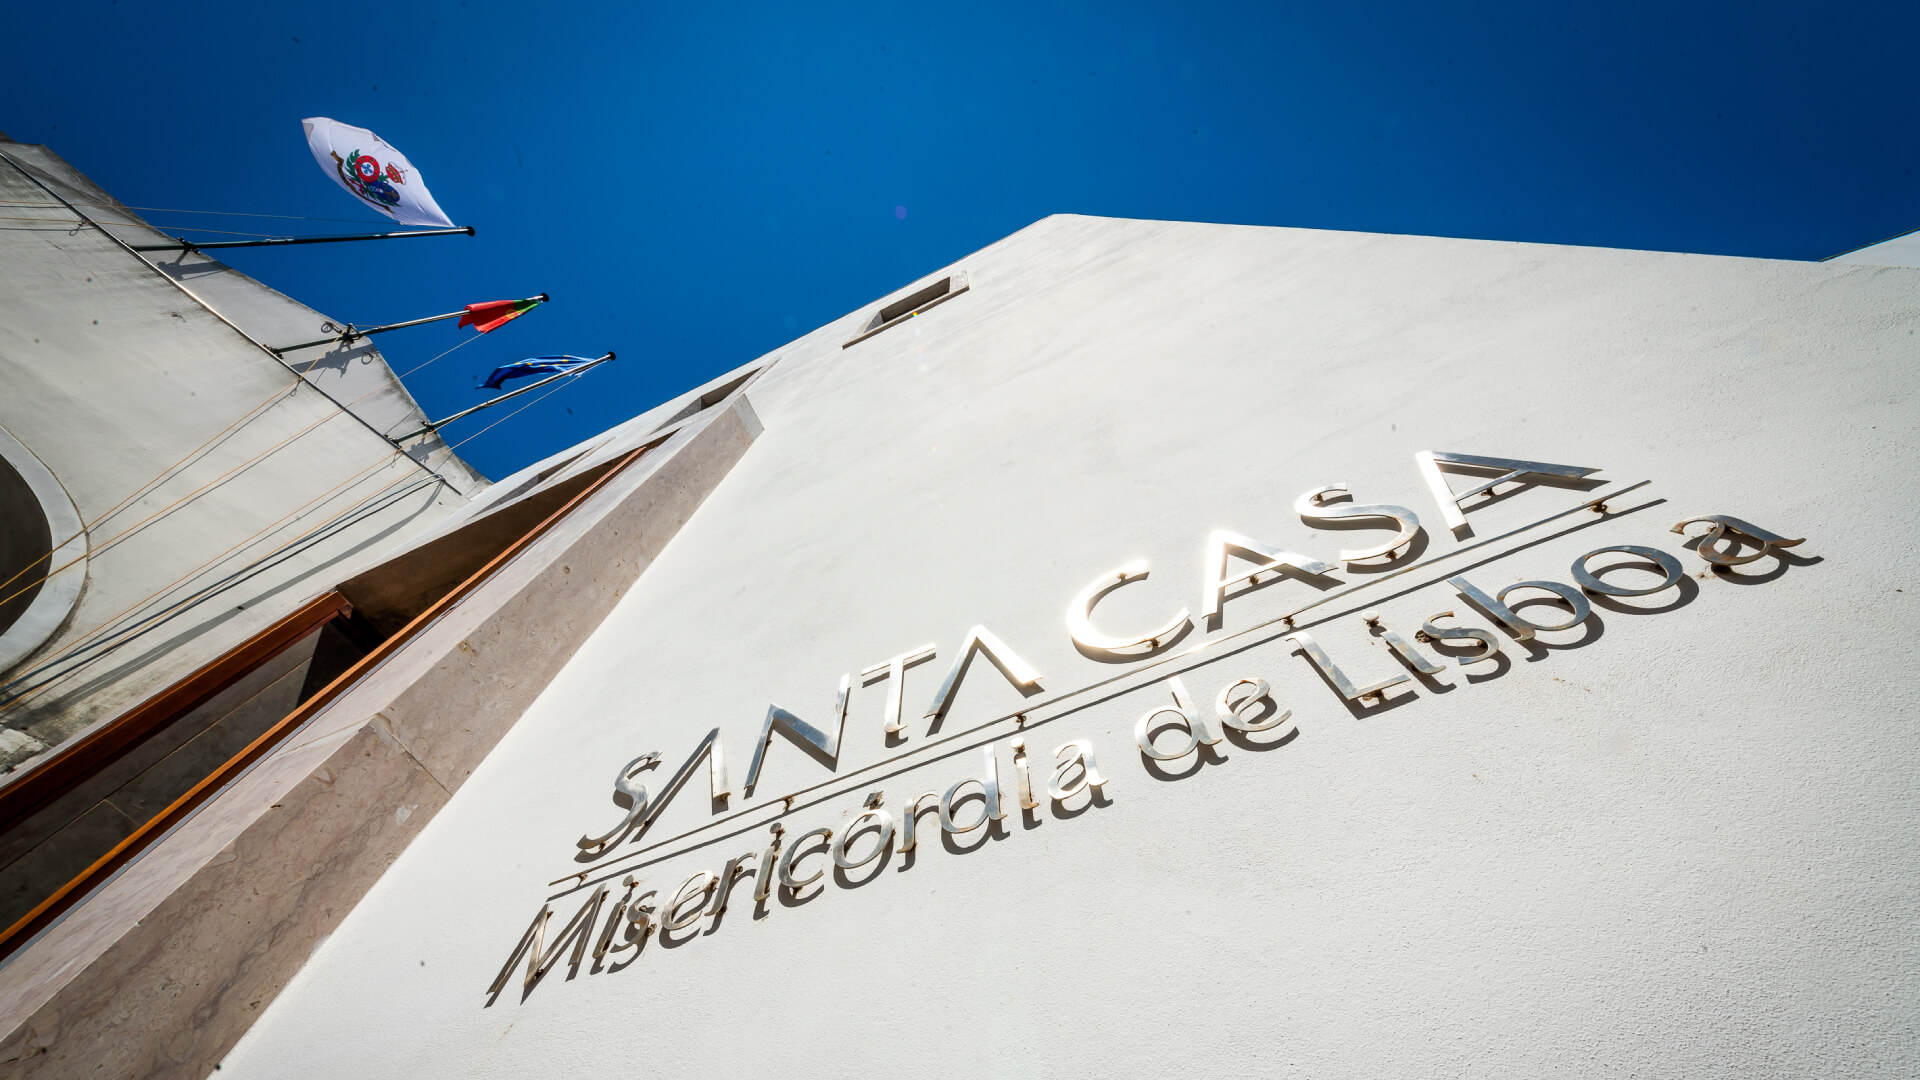 Santa Casa adere à Plataforma Portuguesa para a Integridade